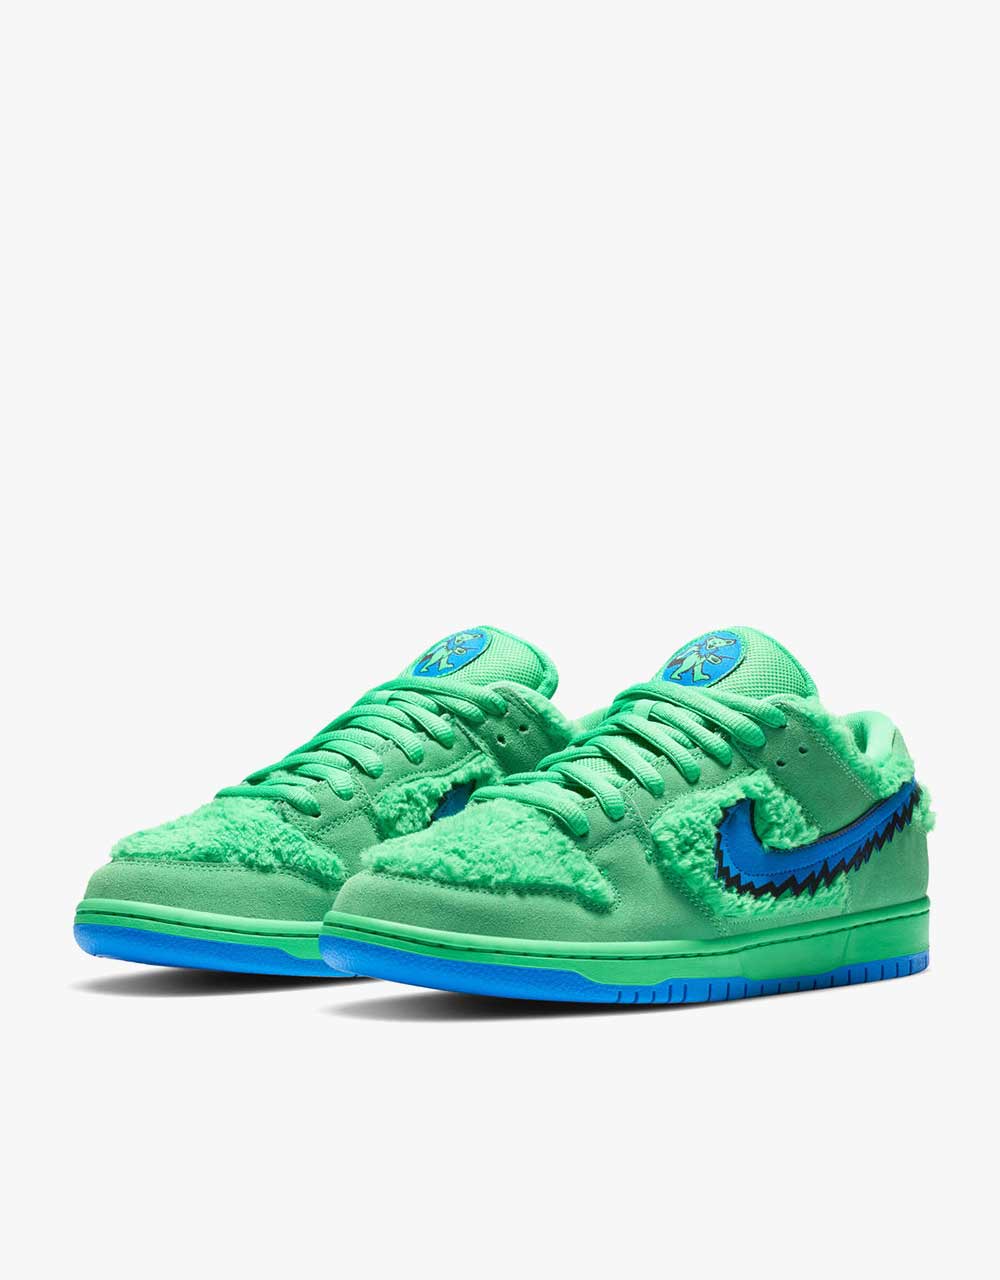 Nike SB Dunk Low Pro QS Skate Shoes - Green Spark/Soar